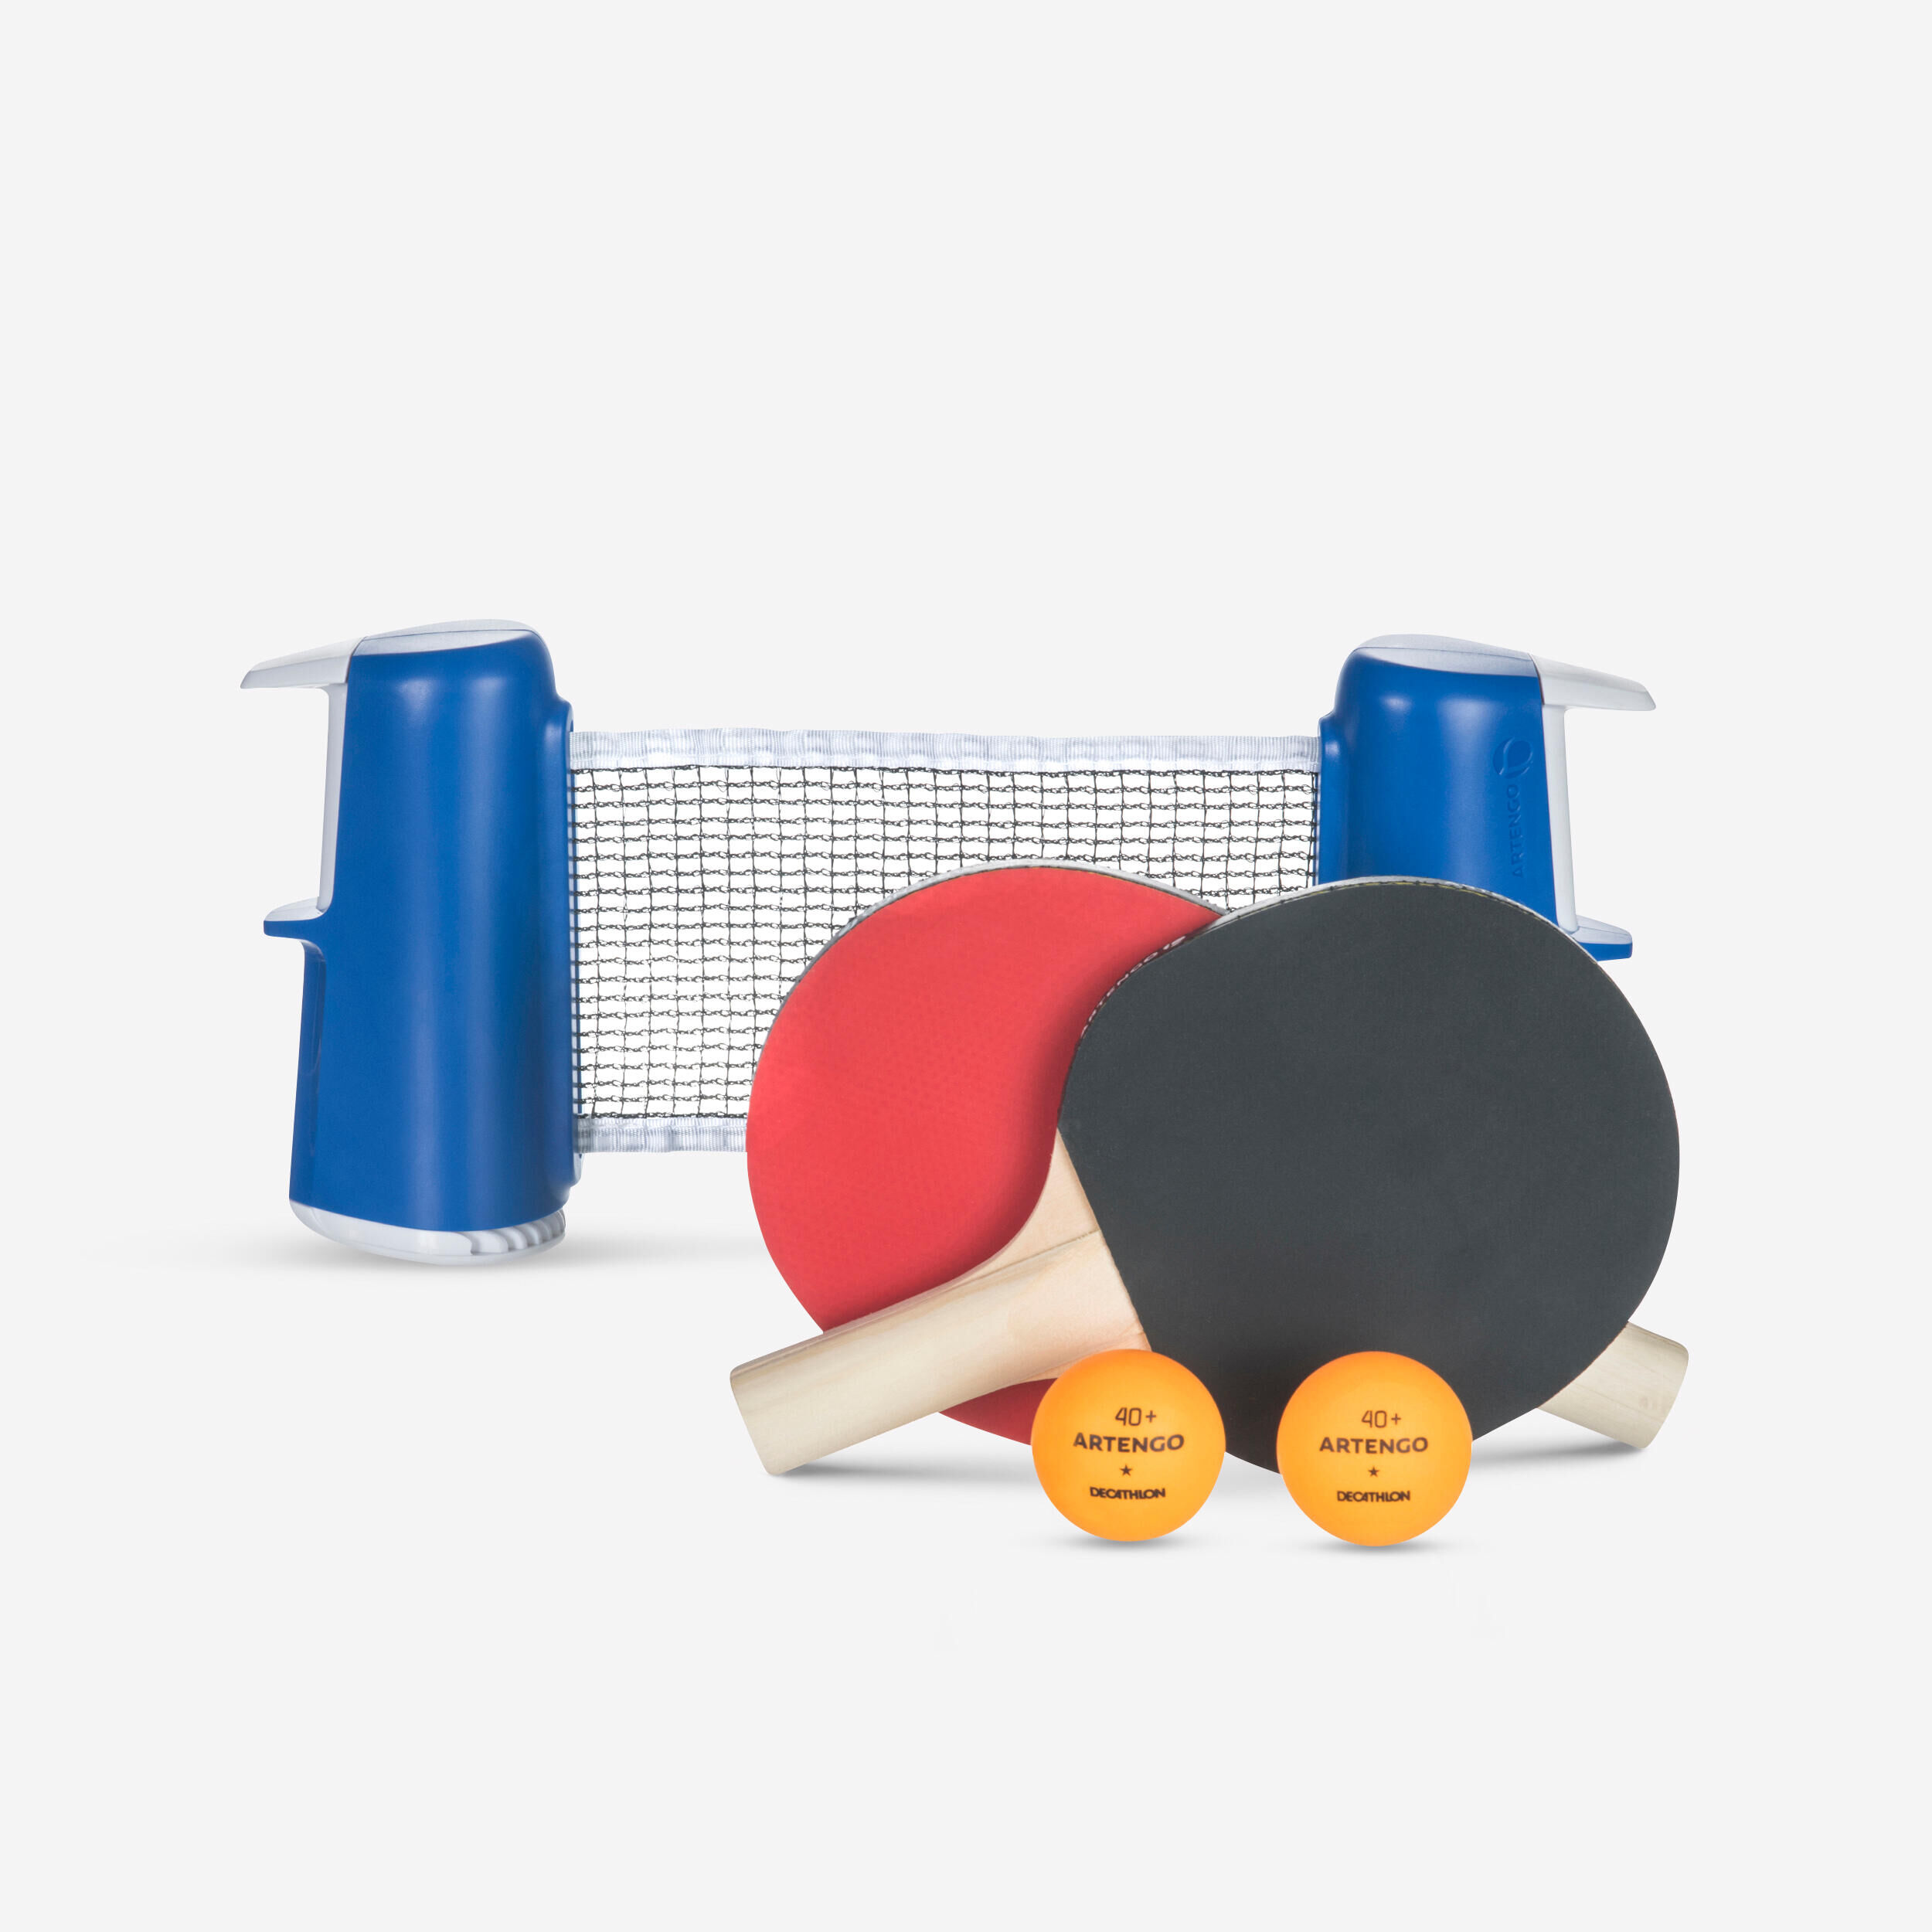 PONGORI Small Indoor Table Tennis Set with a Rollnet + 2 Table Tennis Bats + 2 Balls